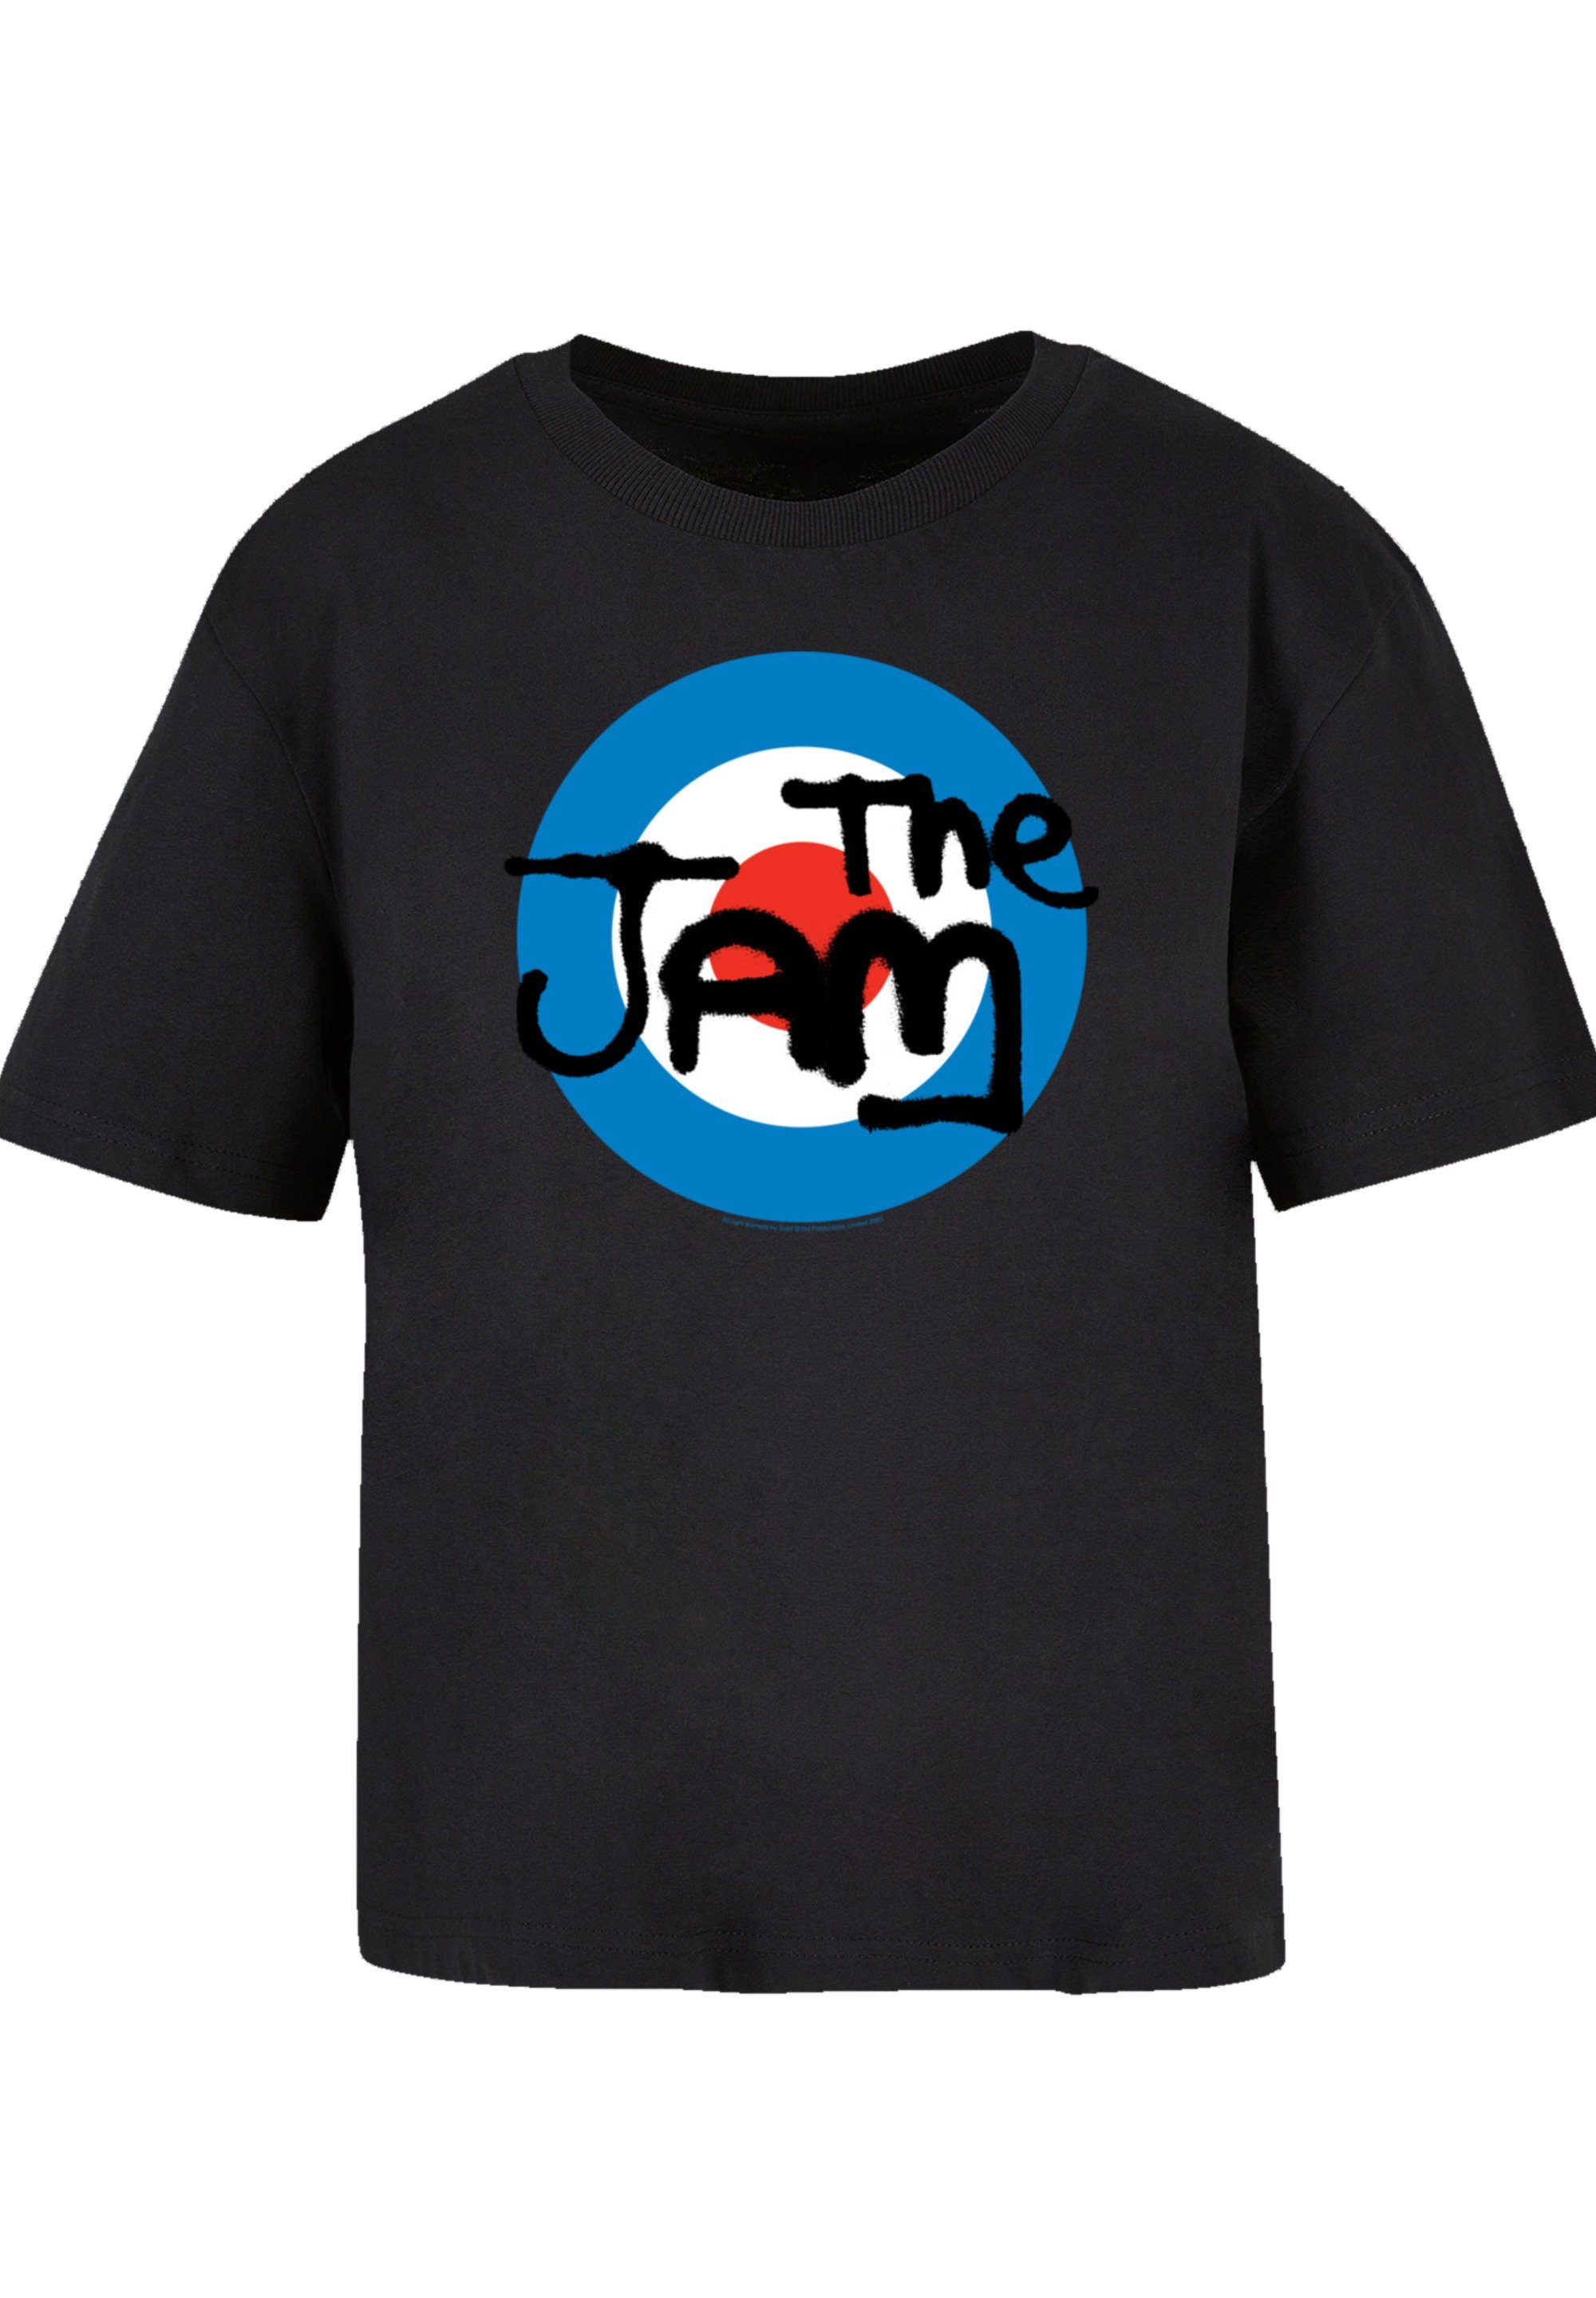 F4NT4STIC T-Shirt The Jam Band Classic Logo Premium Qualität, Komfortabel  und vielseitig kombinierbar